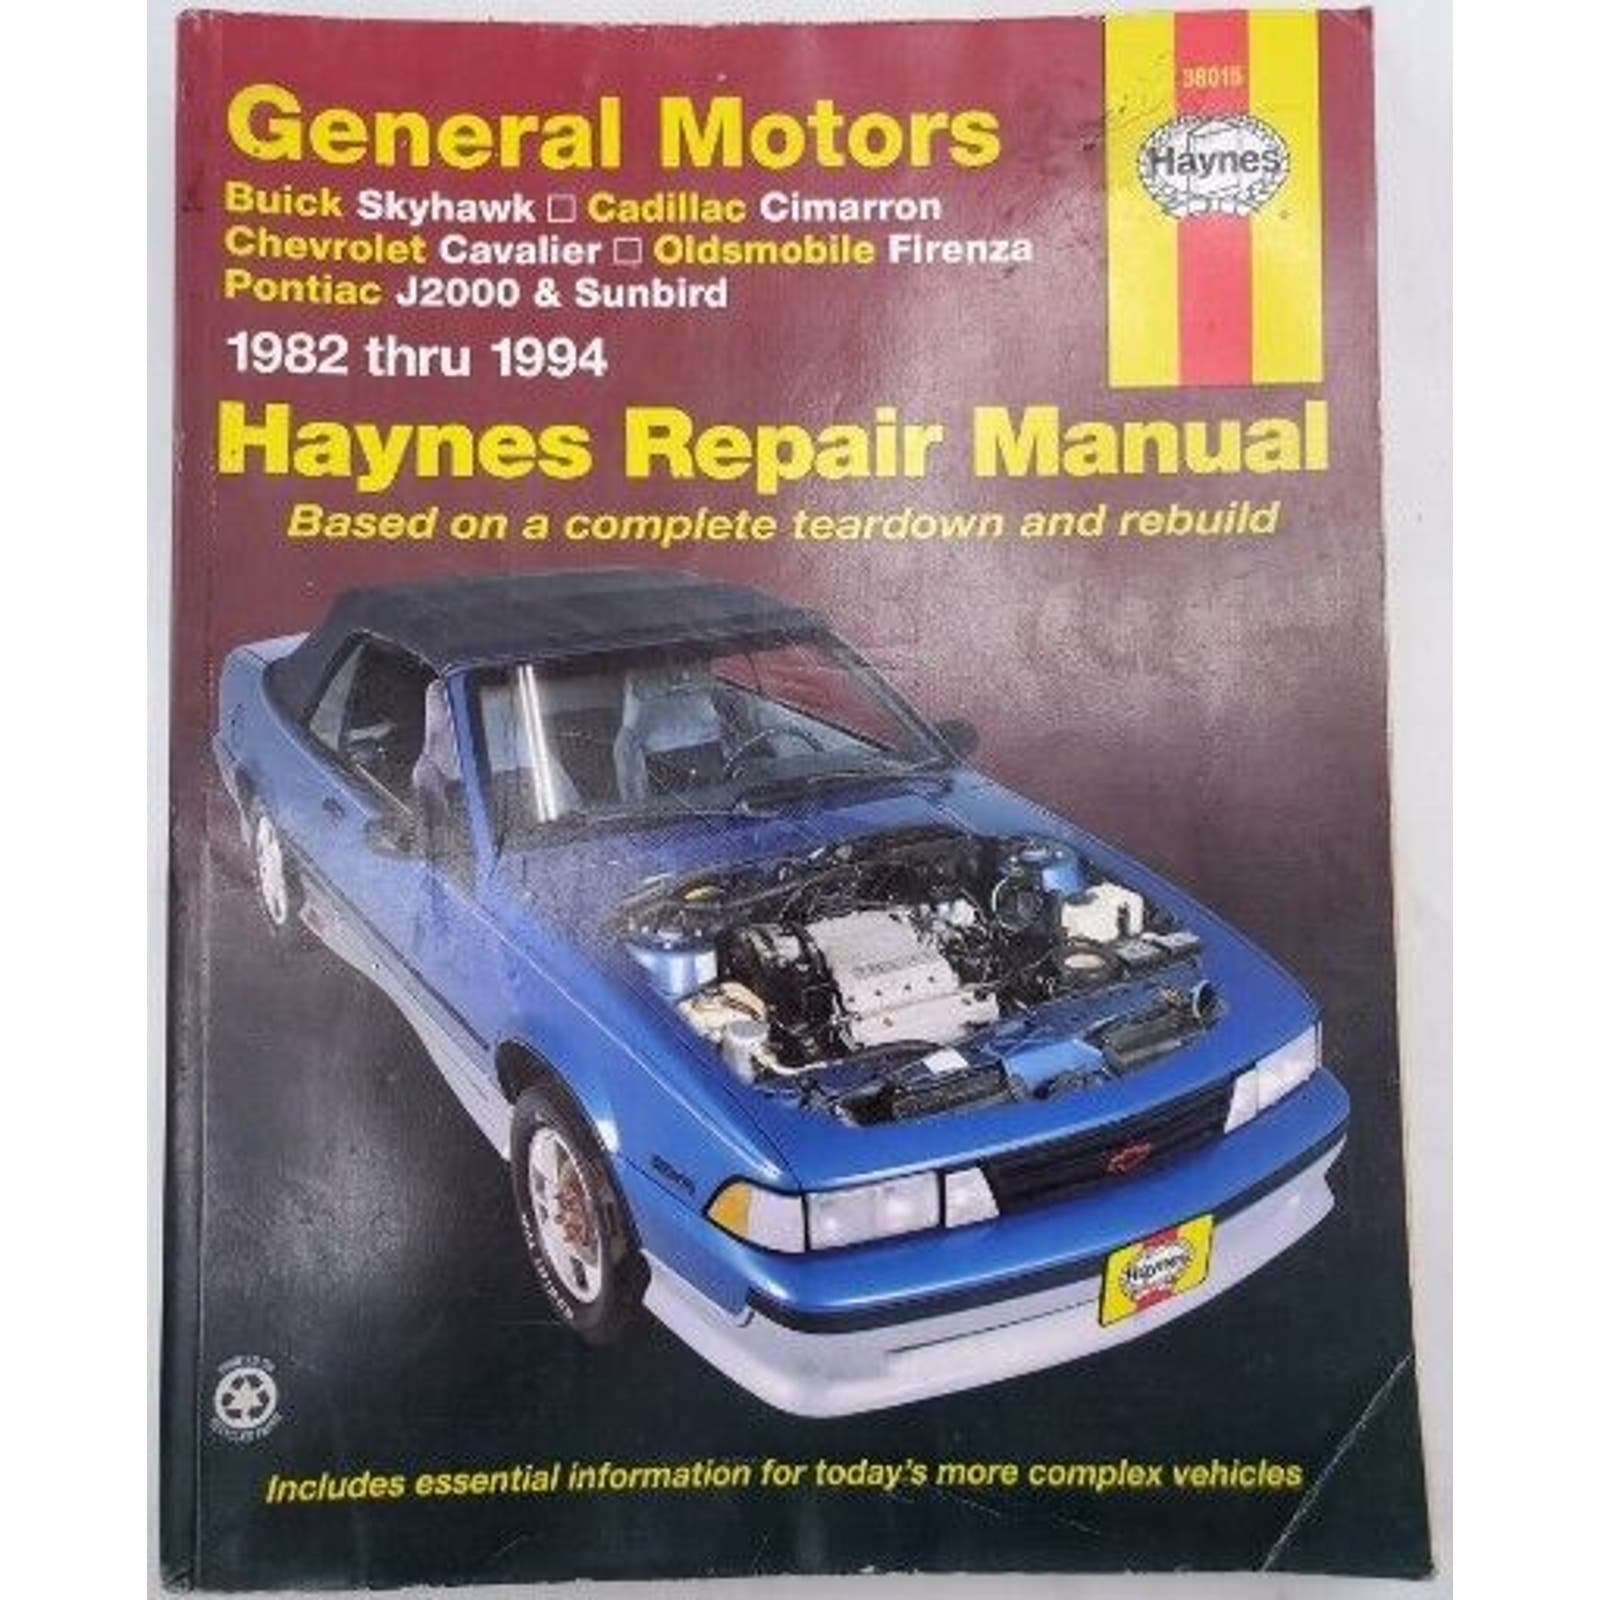 Haynes Repair Manual GM 1982-1994 Buick Skyhawk Chevy Cavalier Pontiac Sunbird qtXjZI3Vy